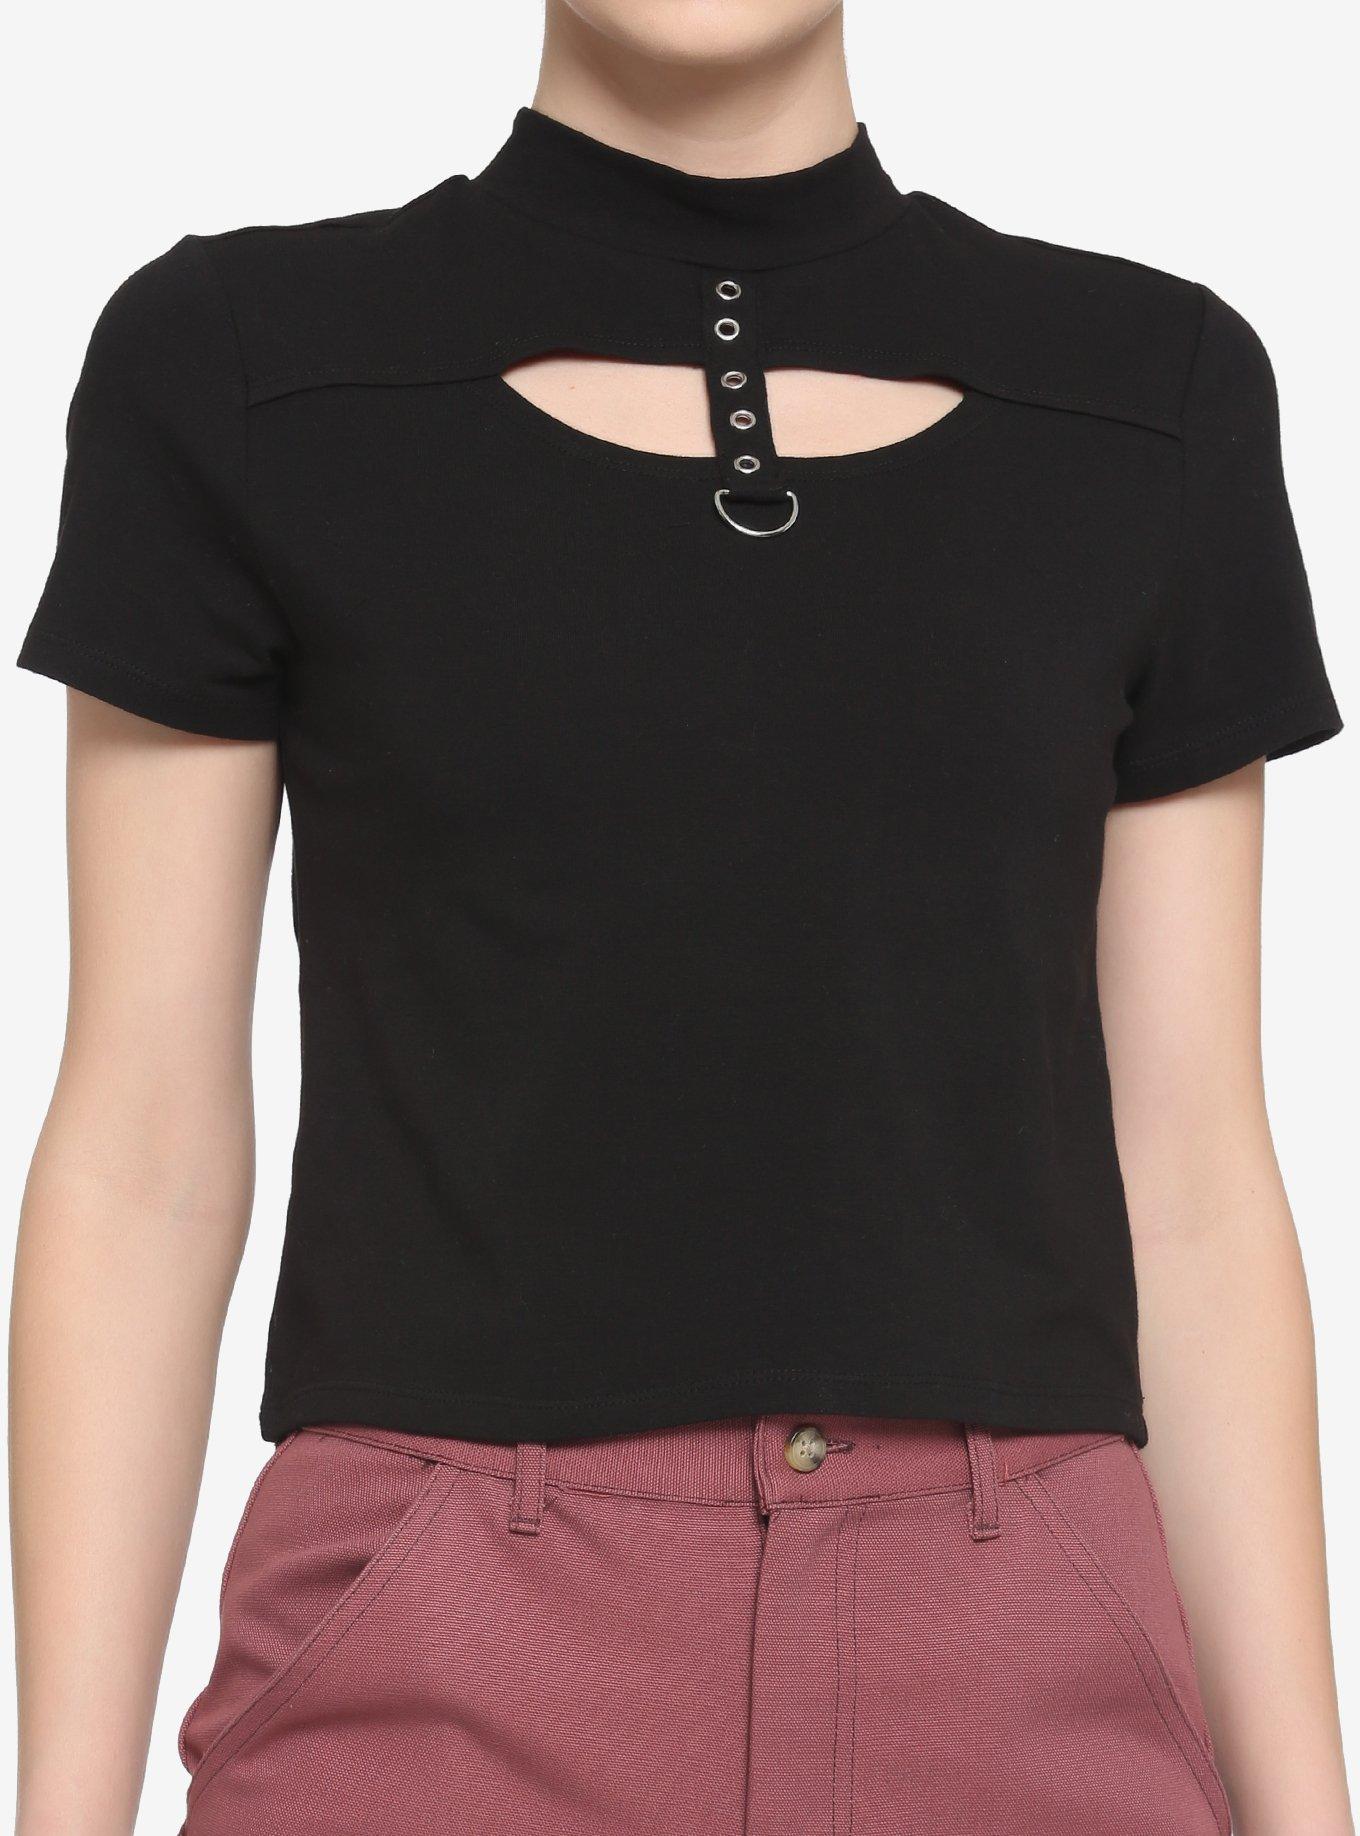 Grommet & D-Ring Strap Mock Neck Cutout Girls Crop T-Shirt, BLACK, alternate